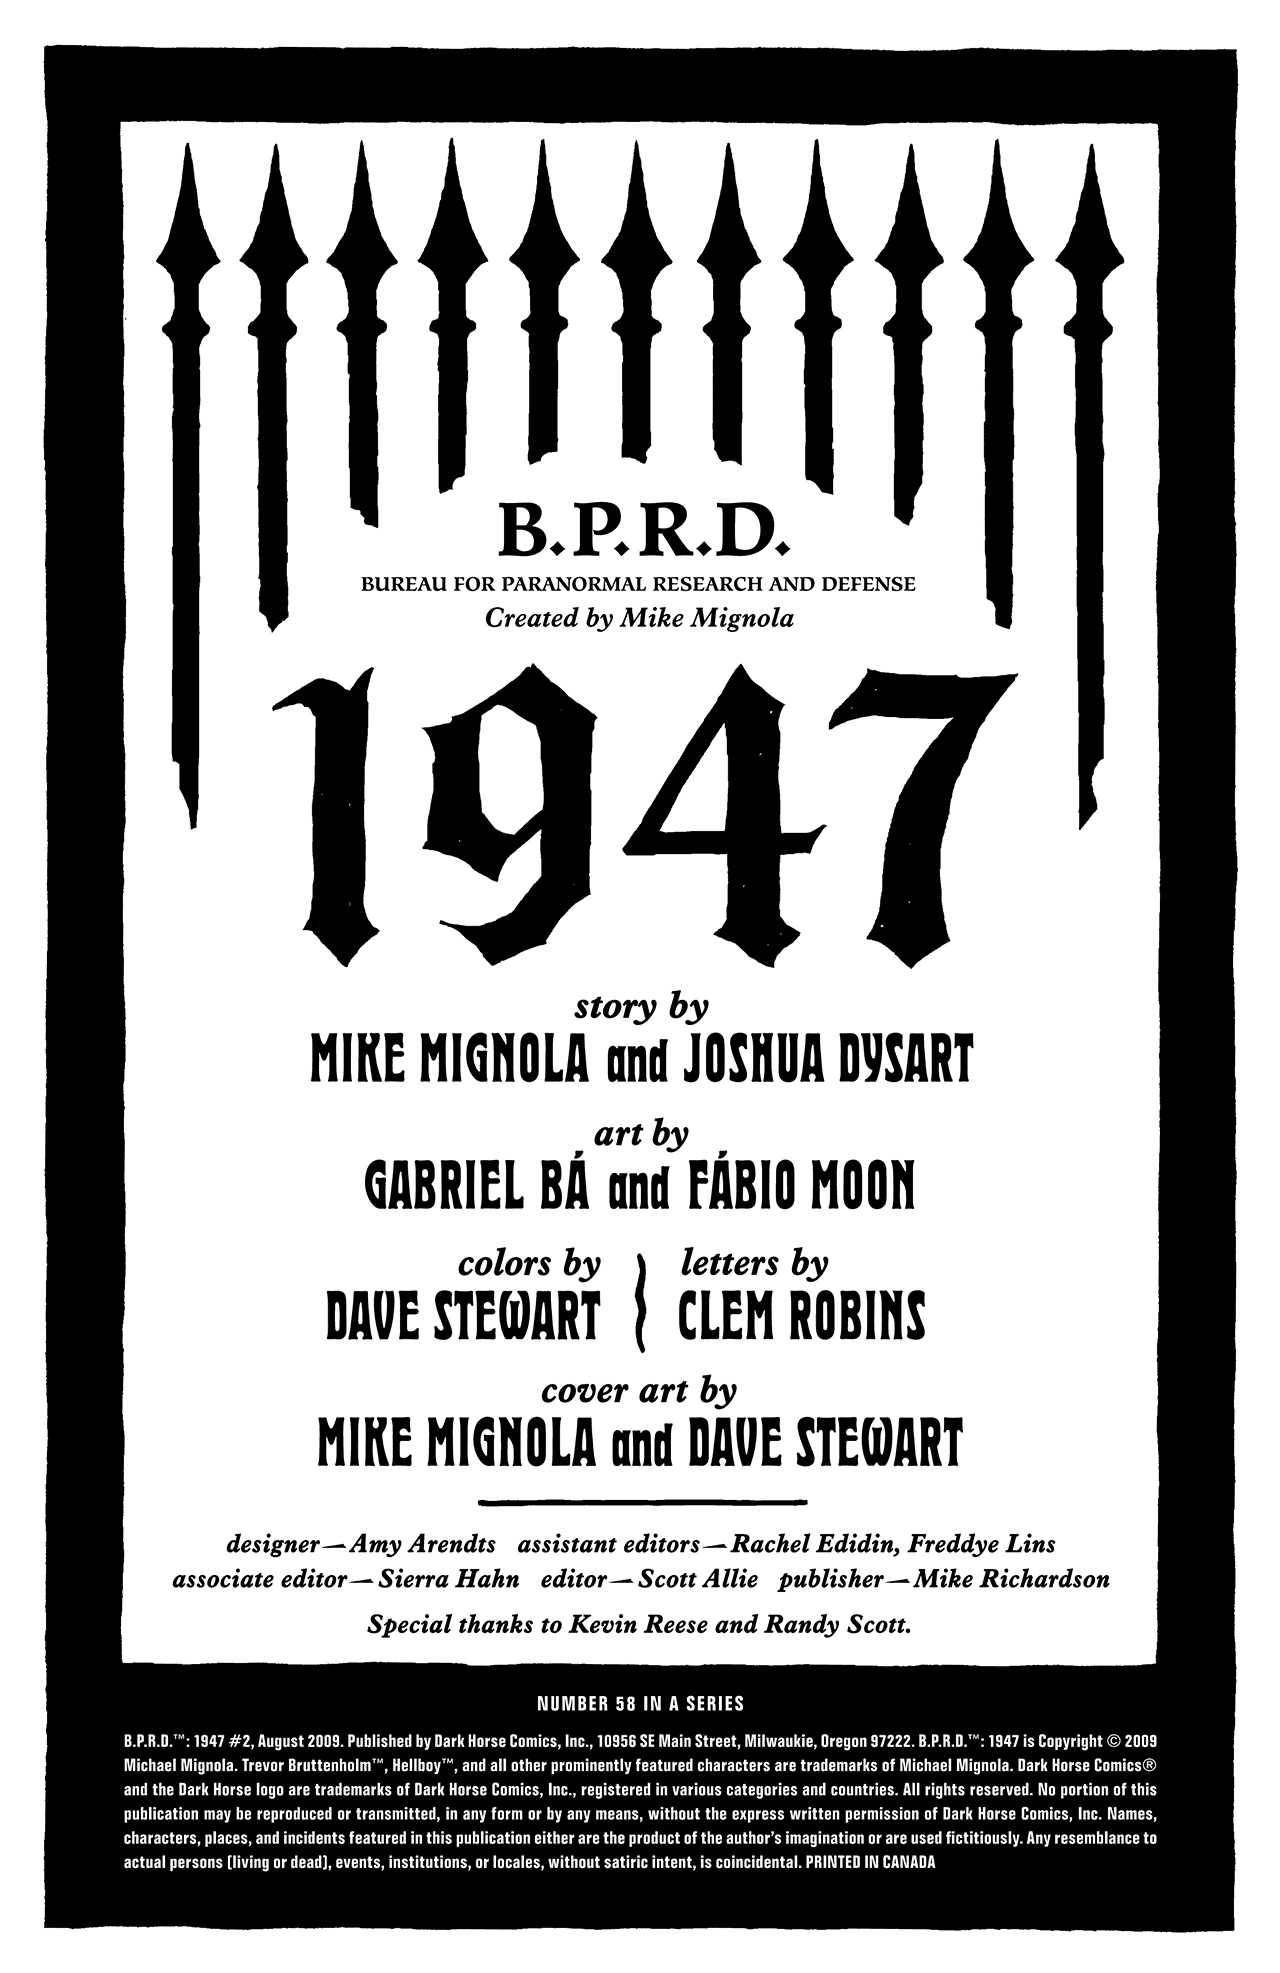 Read online B.P.R.D.: 1947 comic -  Issue #2 - 2